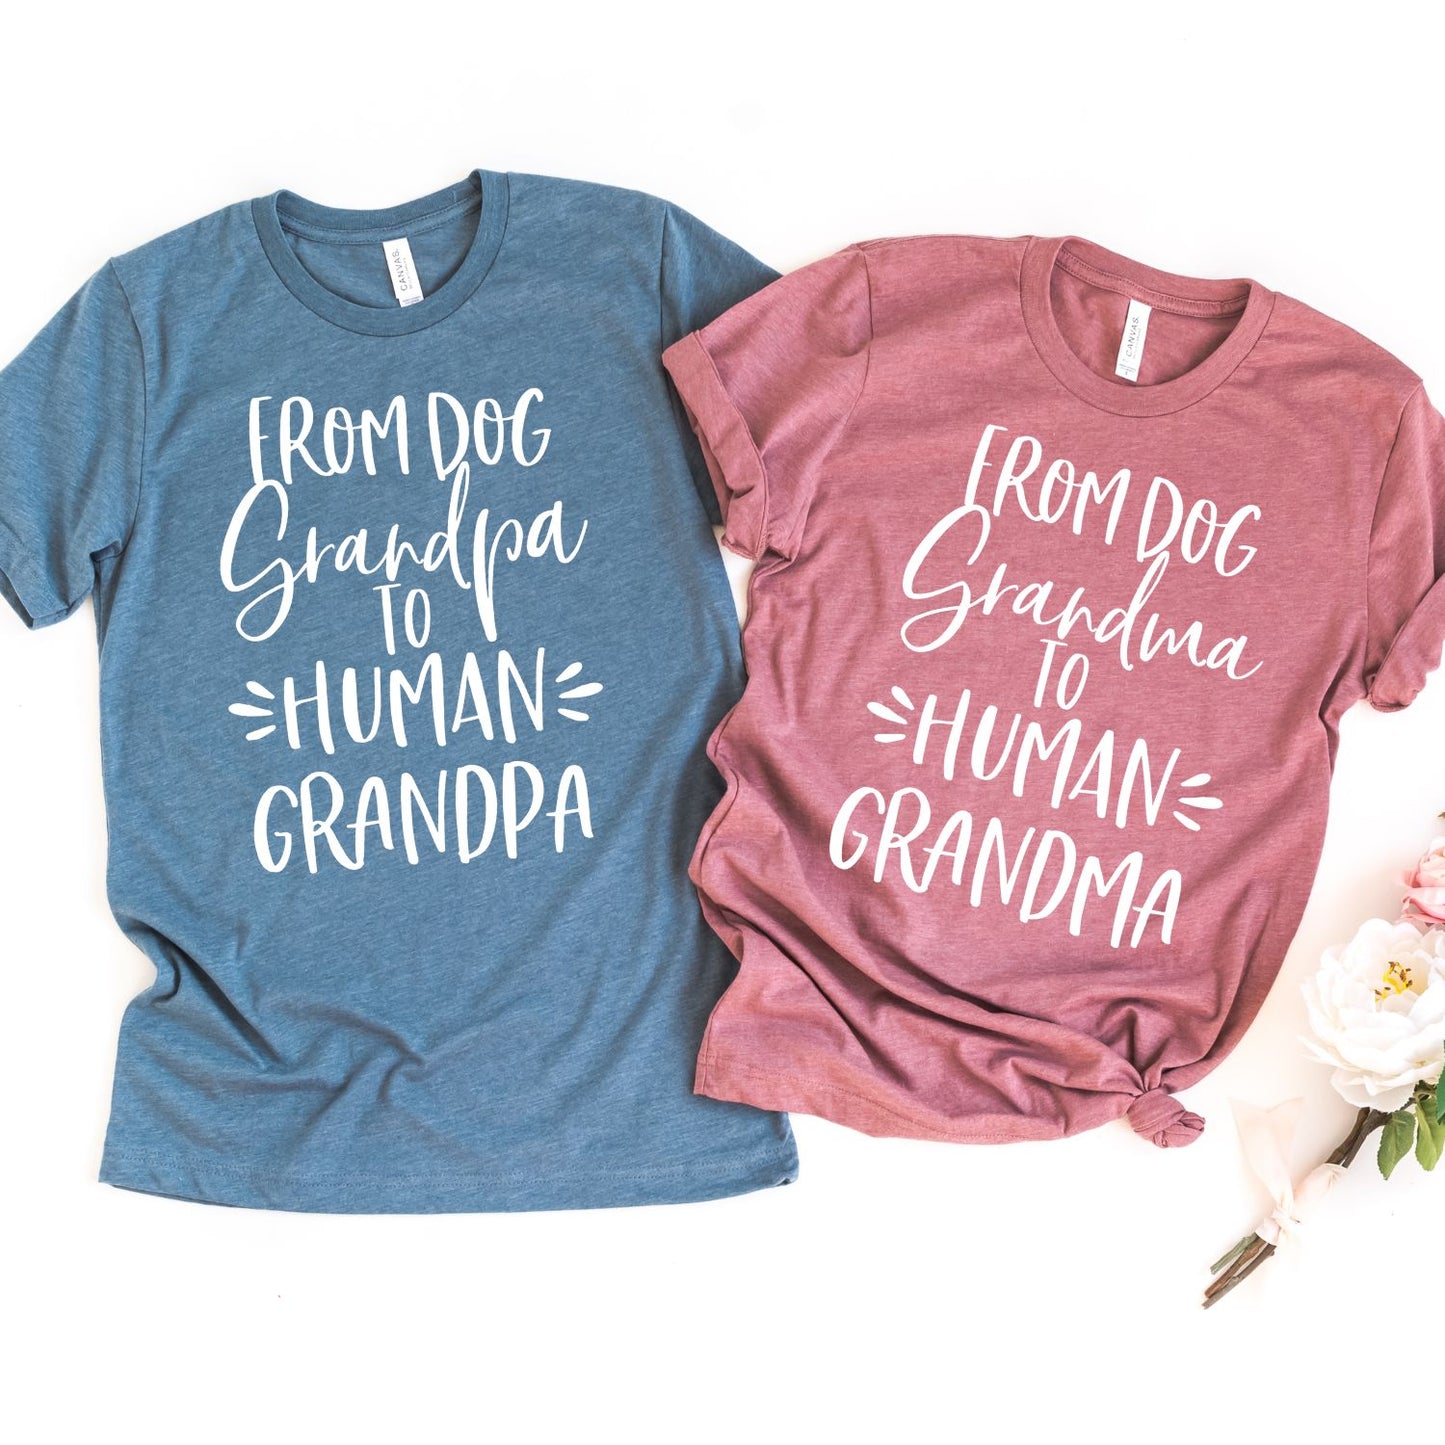 From Dog Grandma to Human Grandma | Grandpa